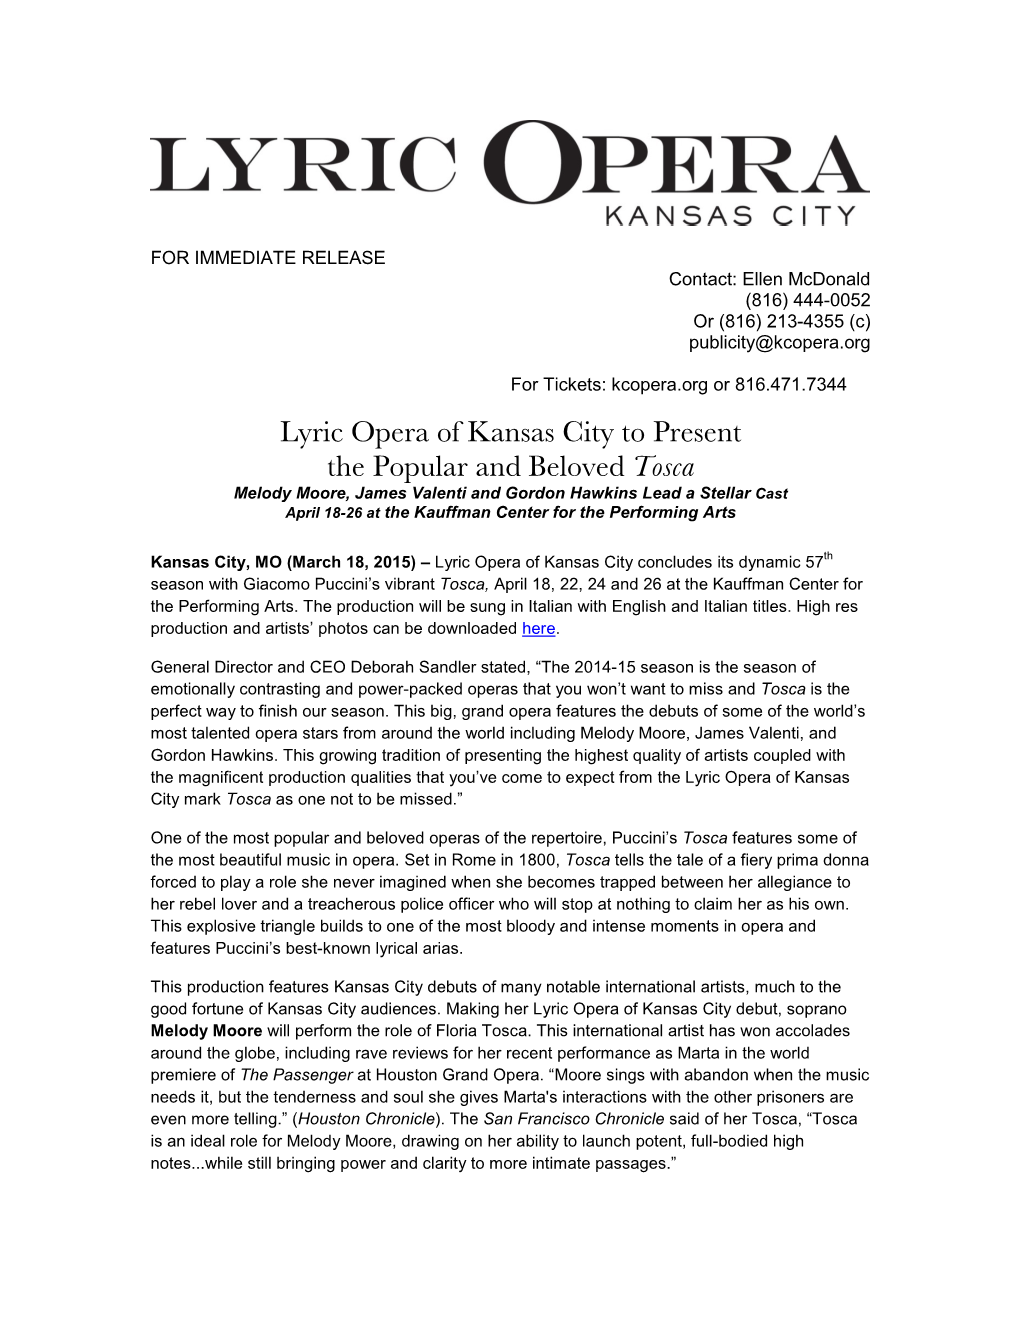 Lyric Opera of Kansas City to Present the Popular and Beloved Tosca